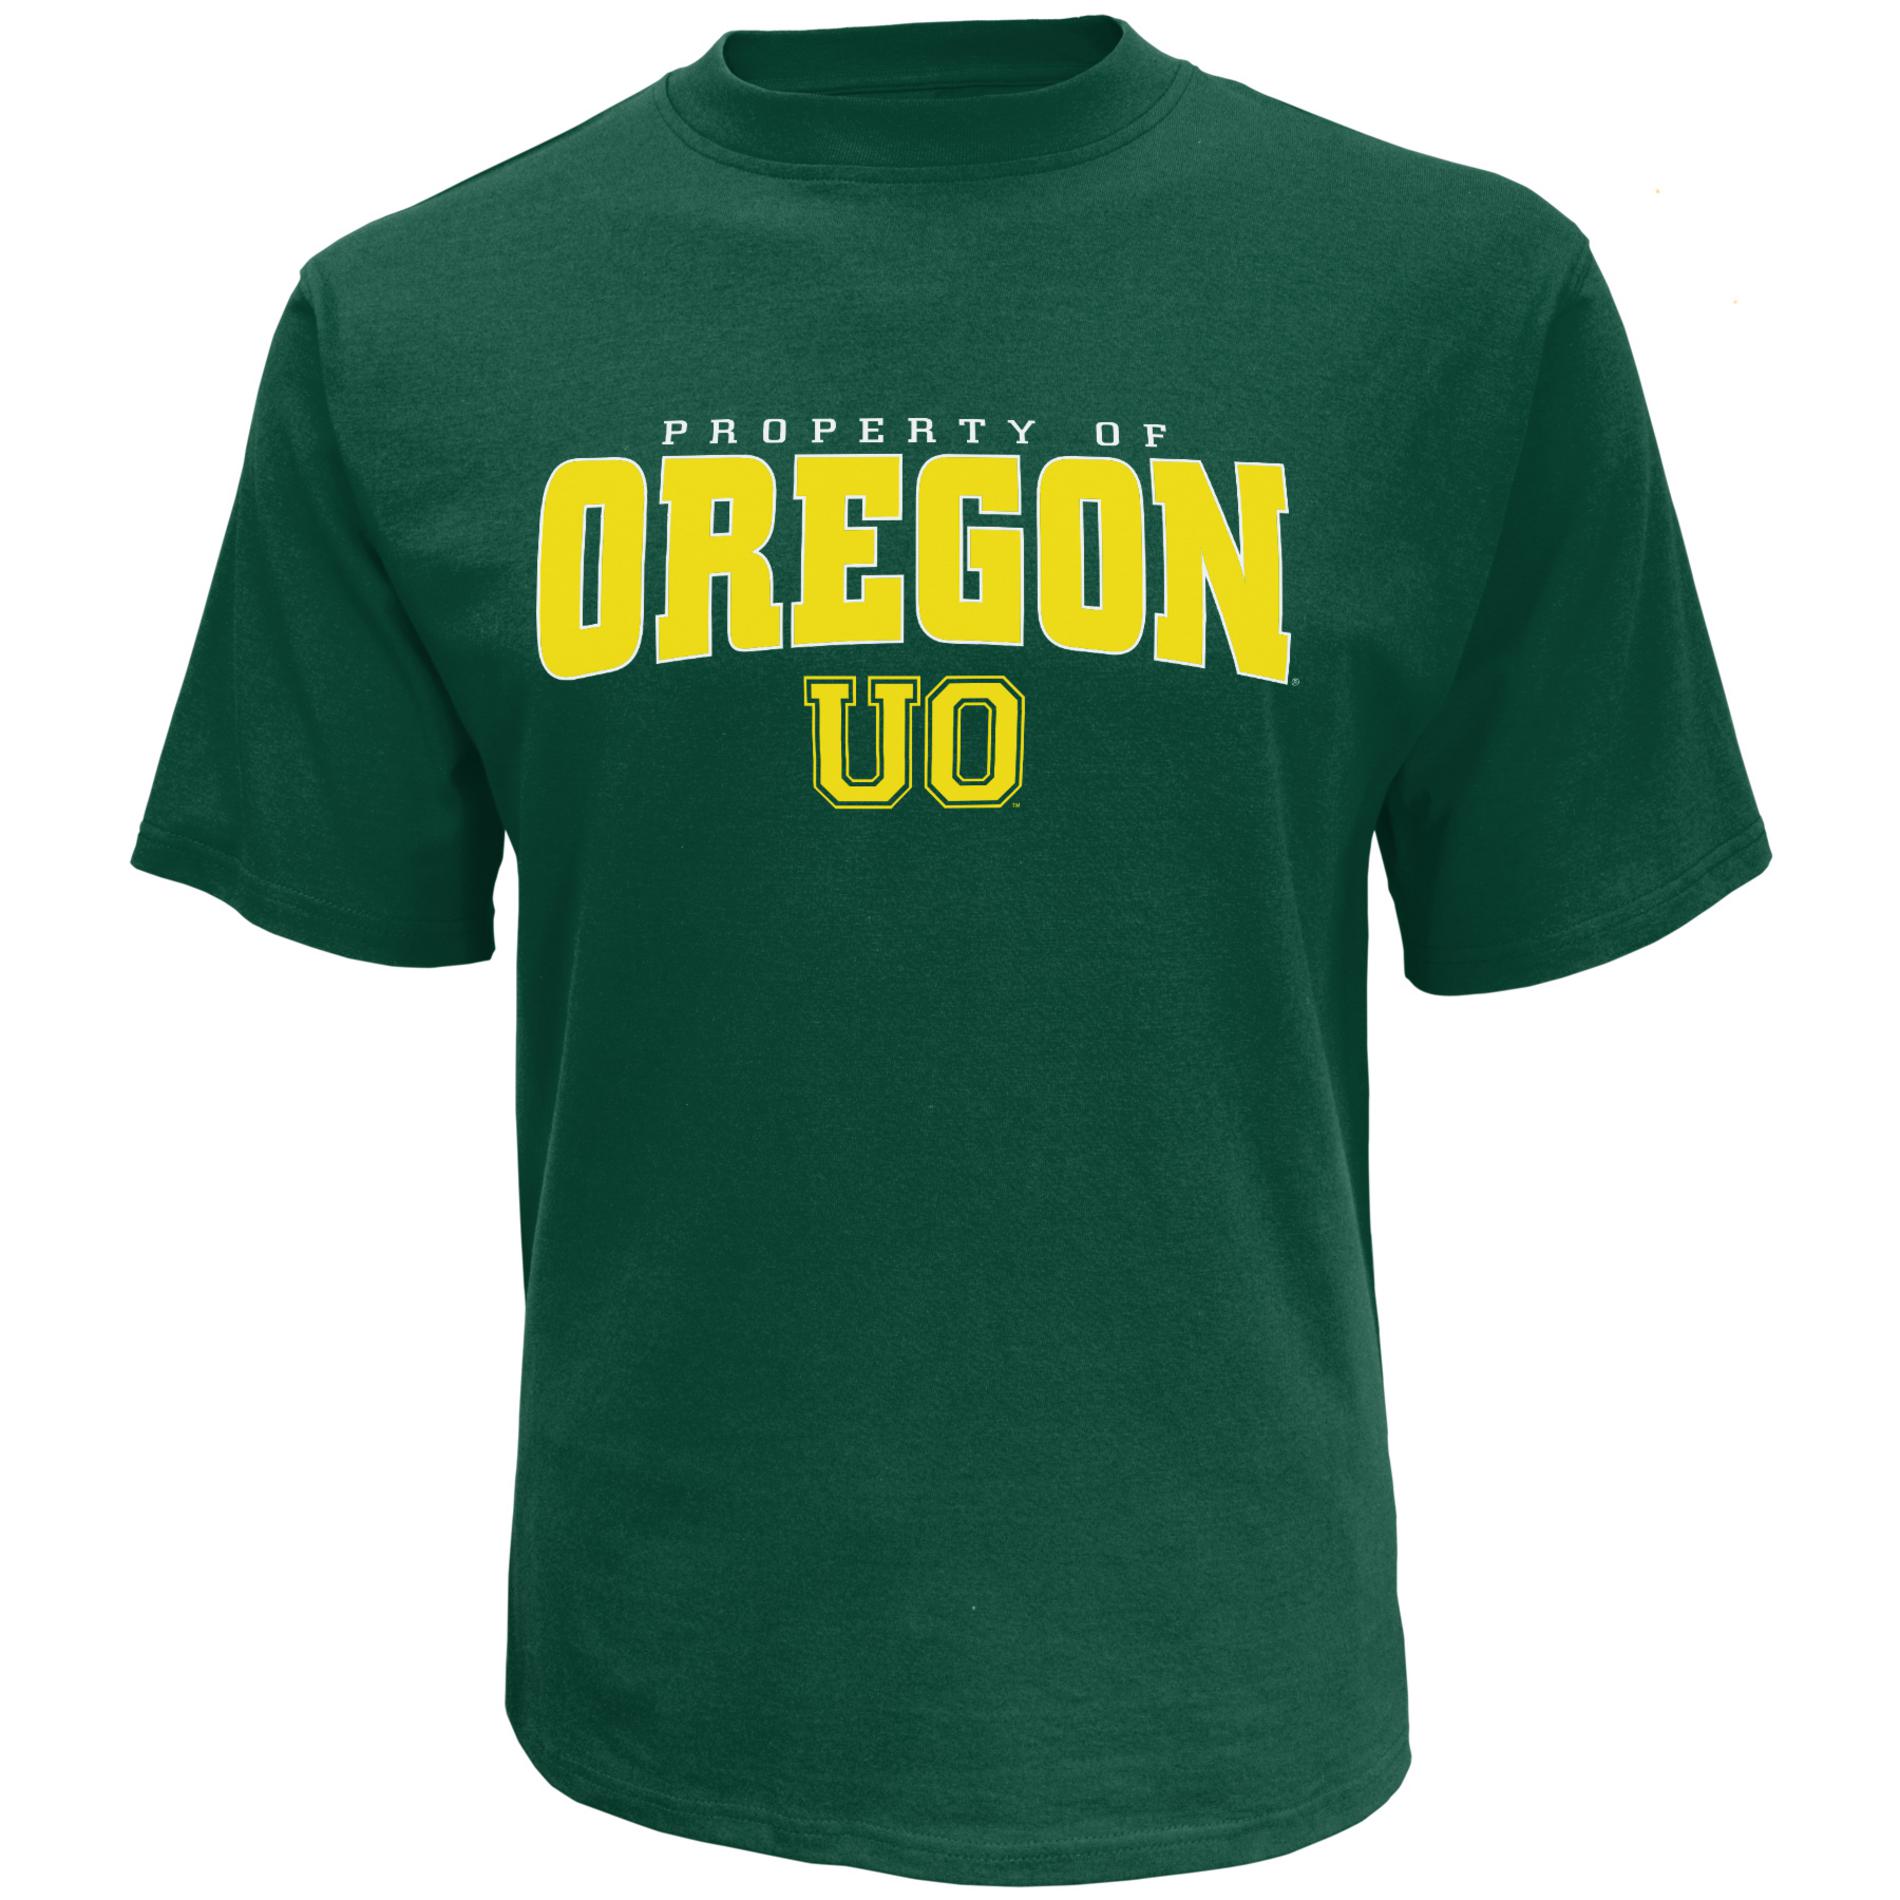 NCAA Men's T-Shirt - University of Oregon Ducks